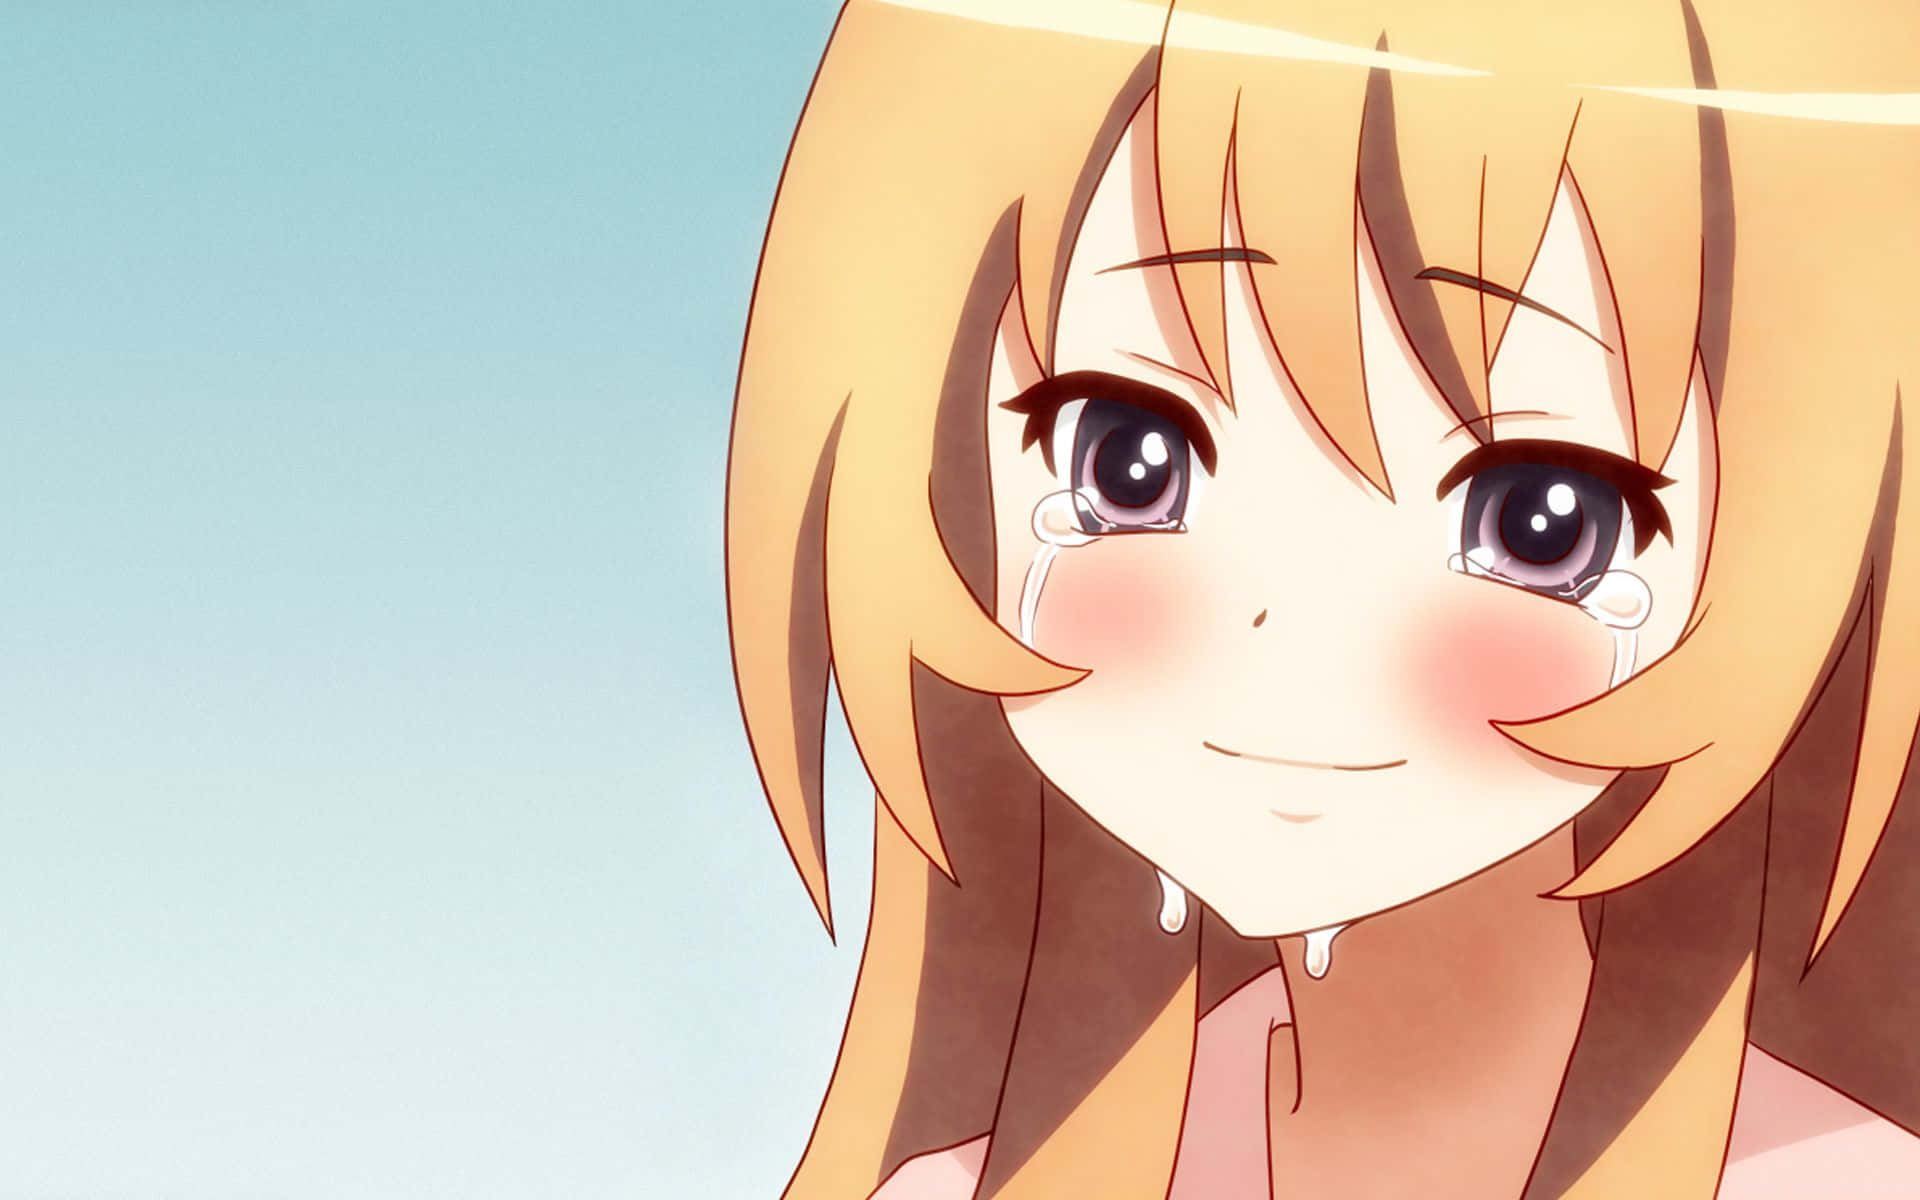 Anime Animegirl Smile Happy Crying Sad  Anime Girl Happy Crying  554x599  PNG Download  PNGkit